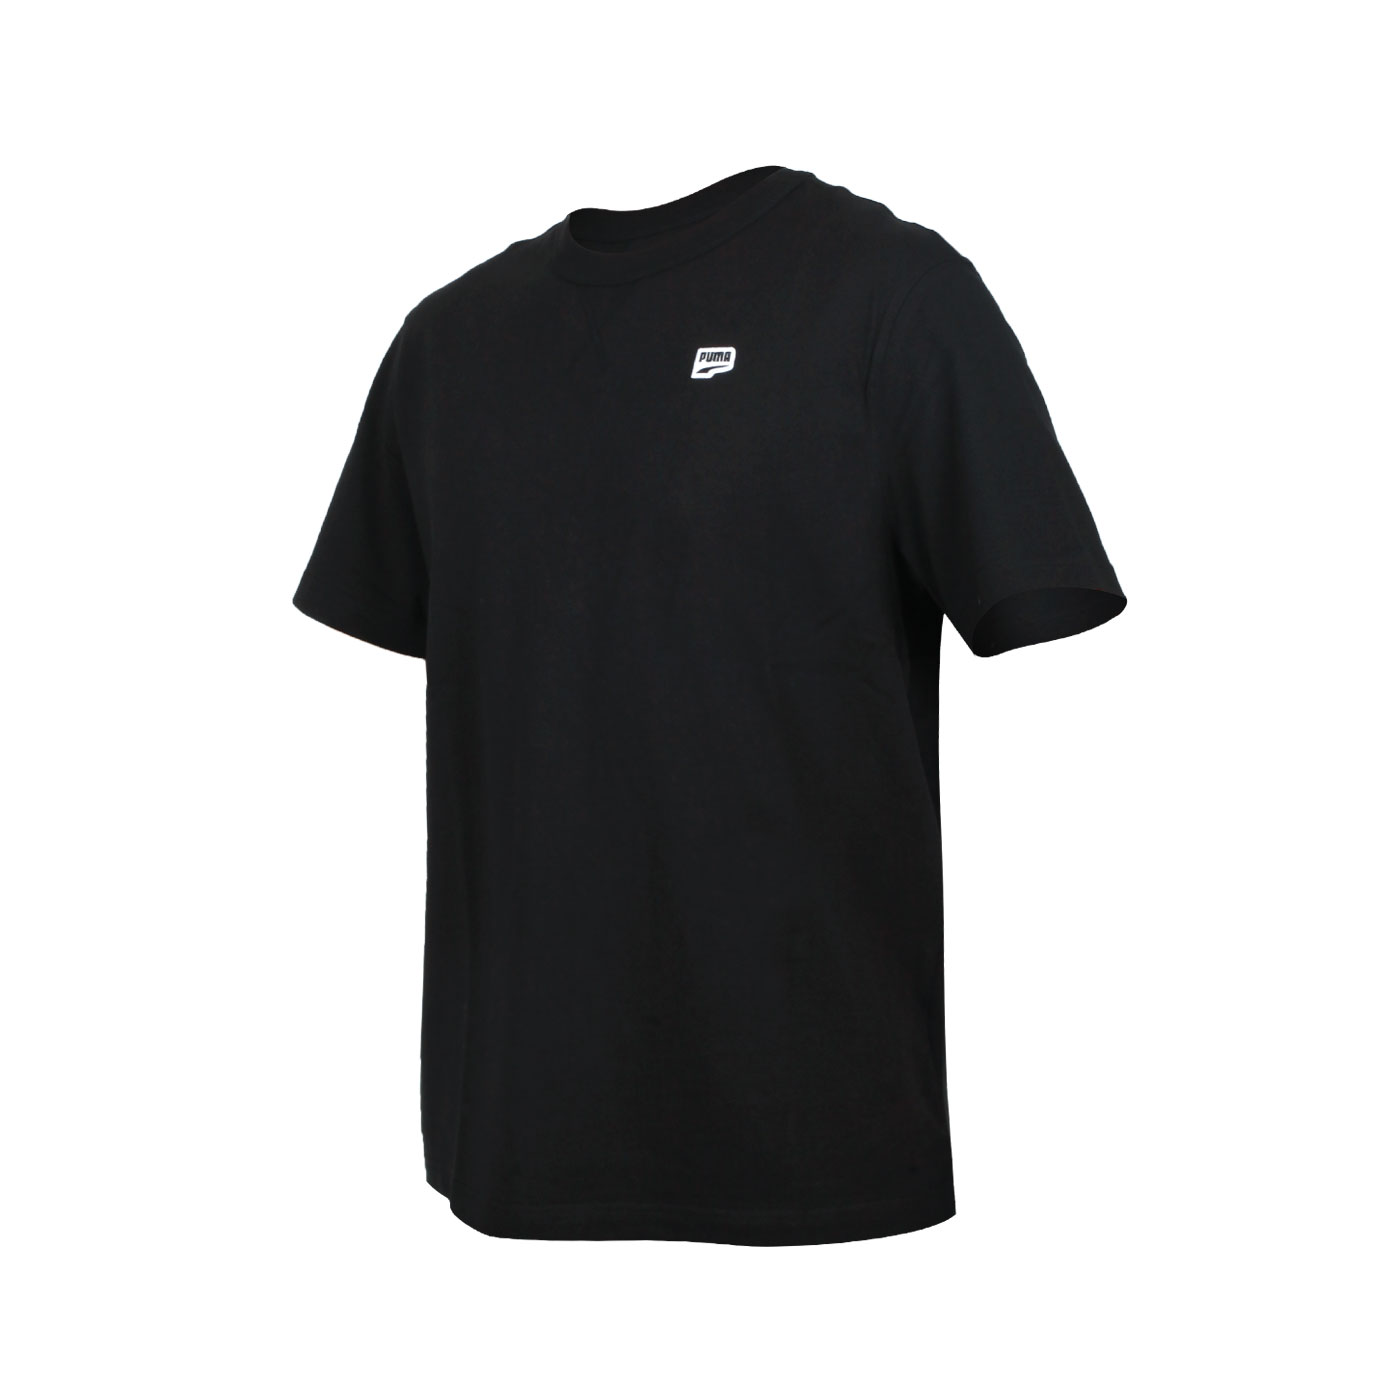 PUMA 男款流行系列Downtown短袖T恤 53428001 - 黑白